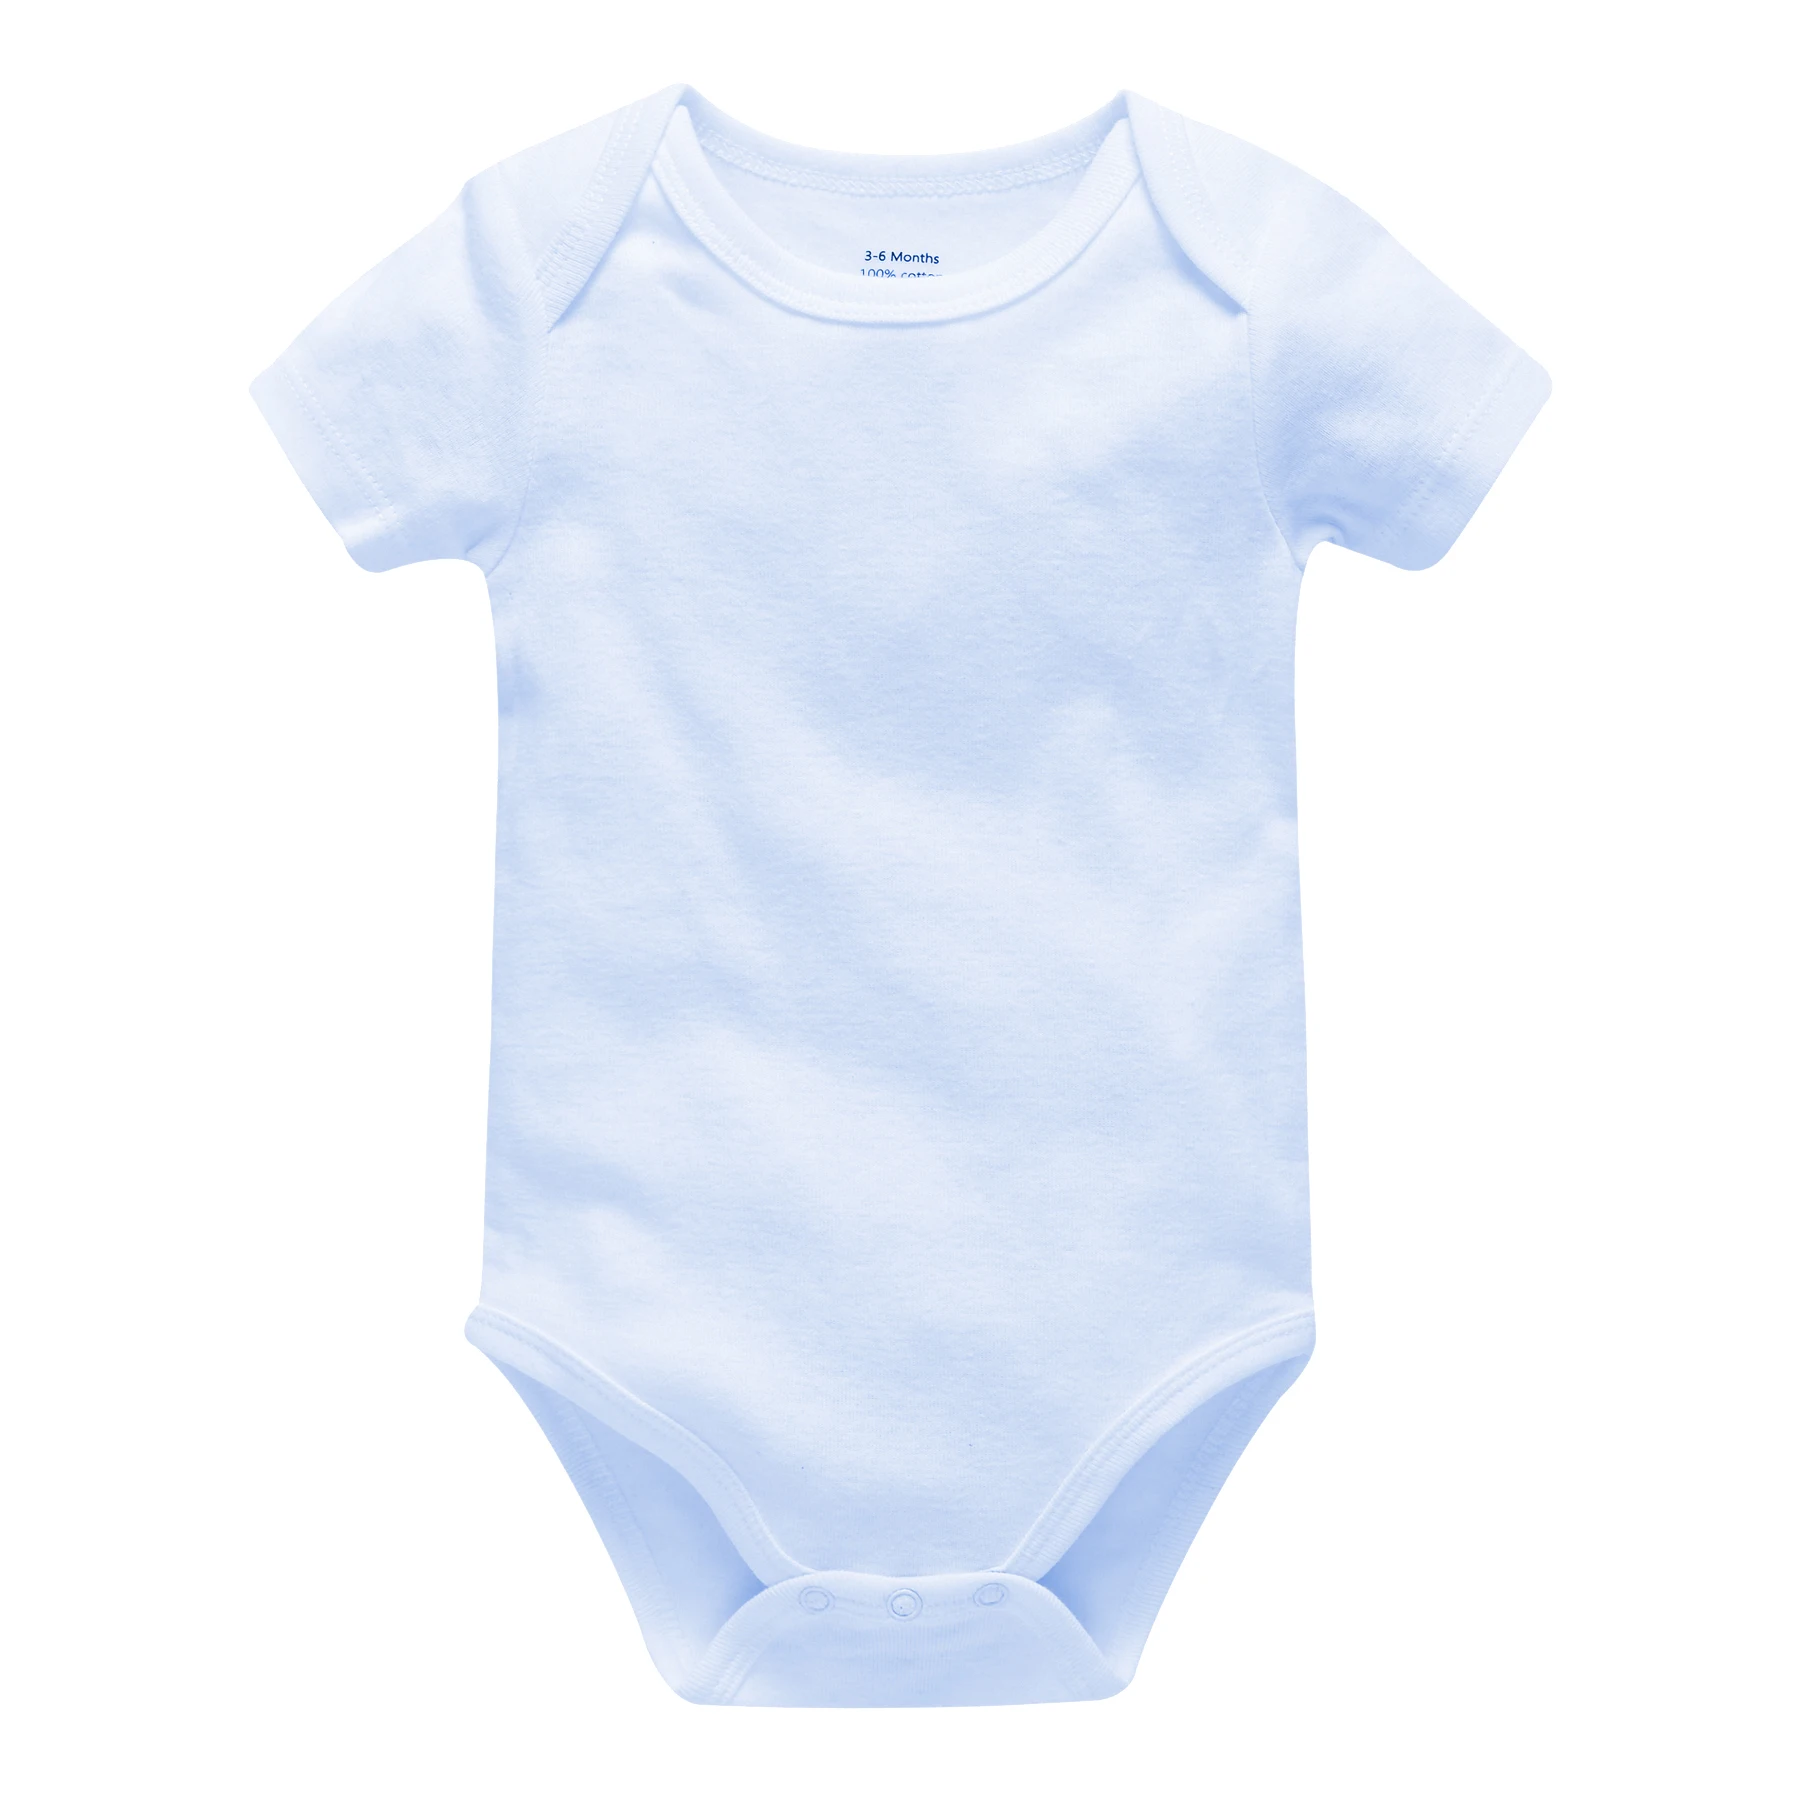 

New Baby Boys Clothes 0-24M Solid Cotton Newborn Clothing Girls Romper Hats Bibs Roupas De Bebe Infantil Baby Outfit Jumpsuit